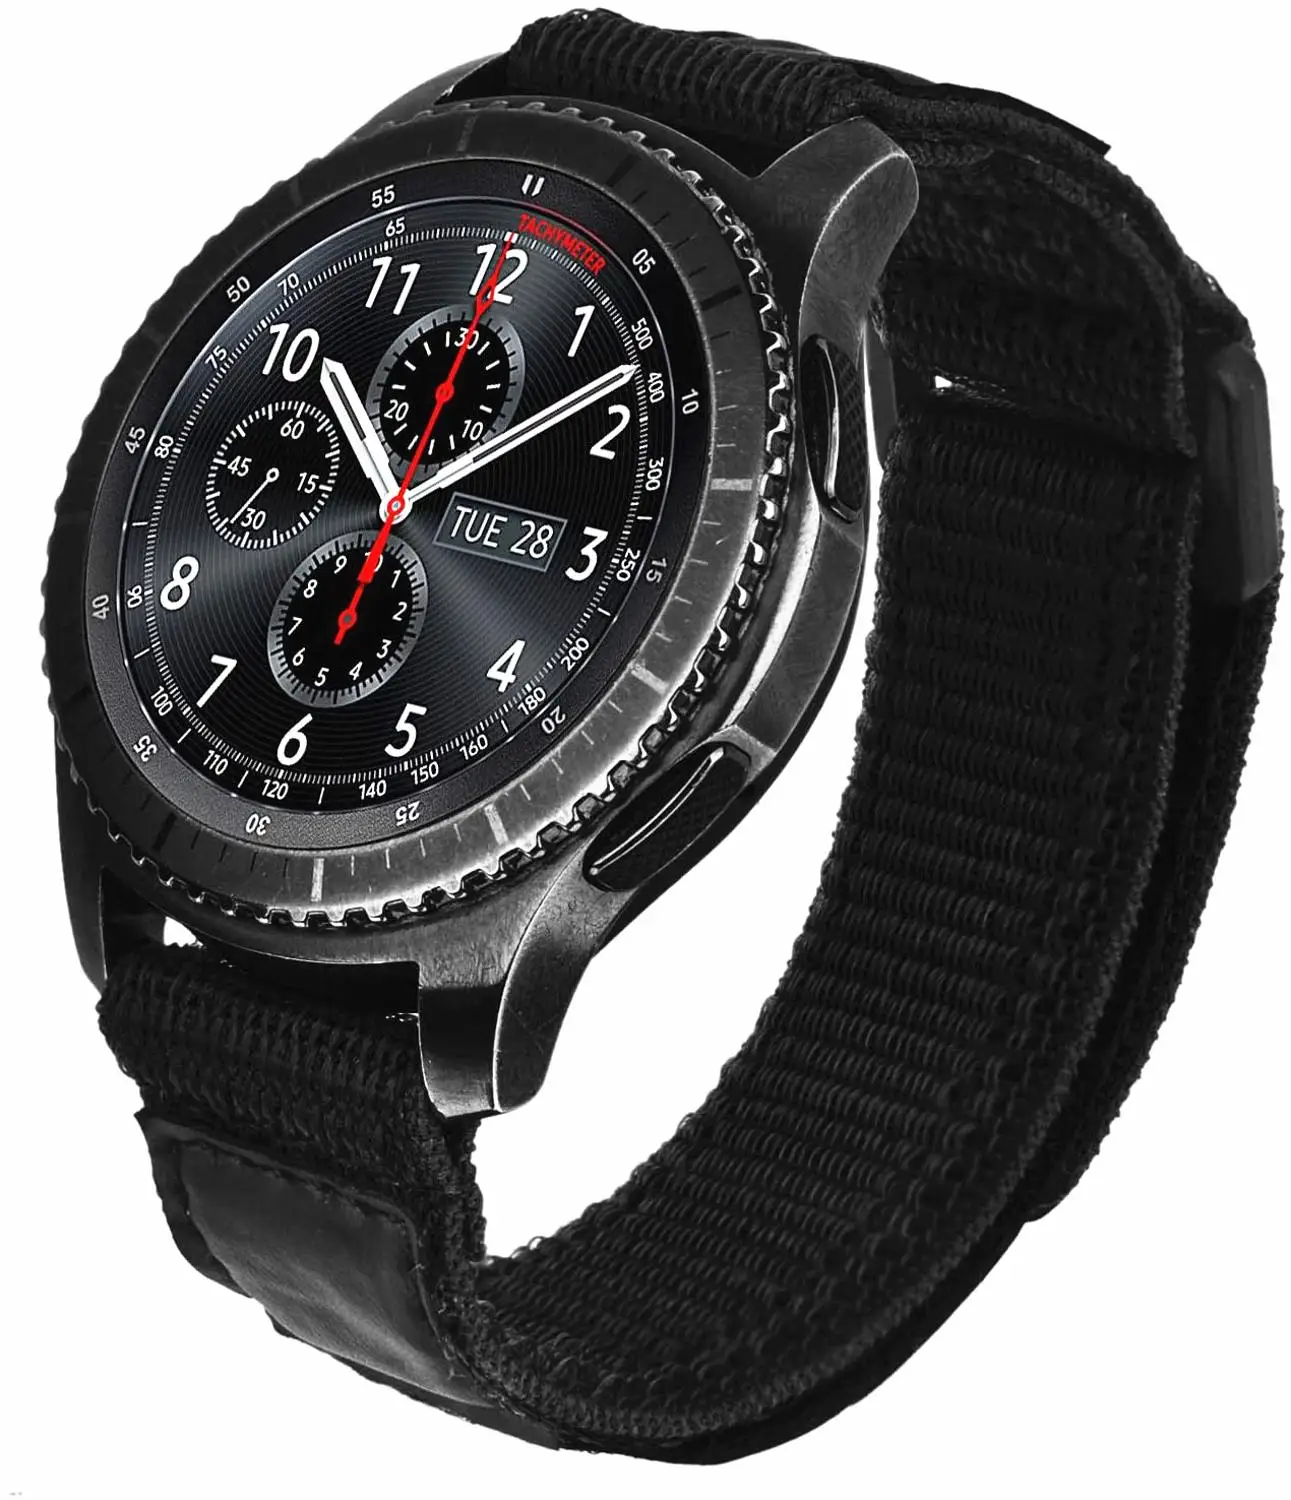 

Nylon band For Samsung Galaxy watch 3 45mm Gear S3 46mm amazfit GTR GTS BIP correa bracelet HUAWEI watch GT 2E PRO strap 22mm